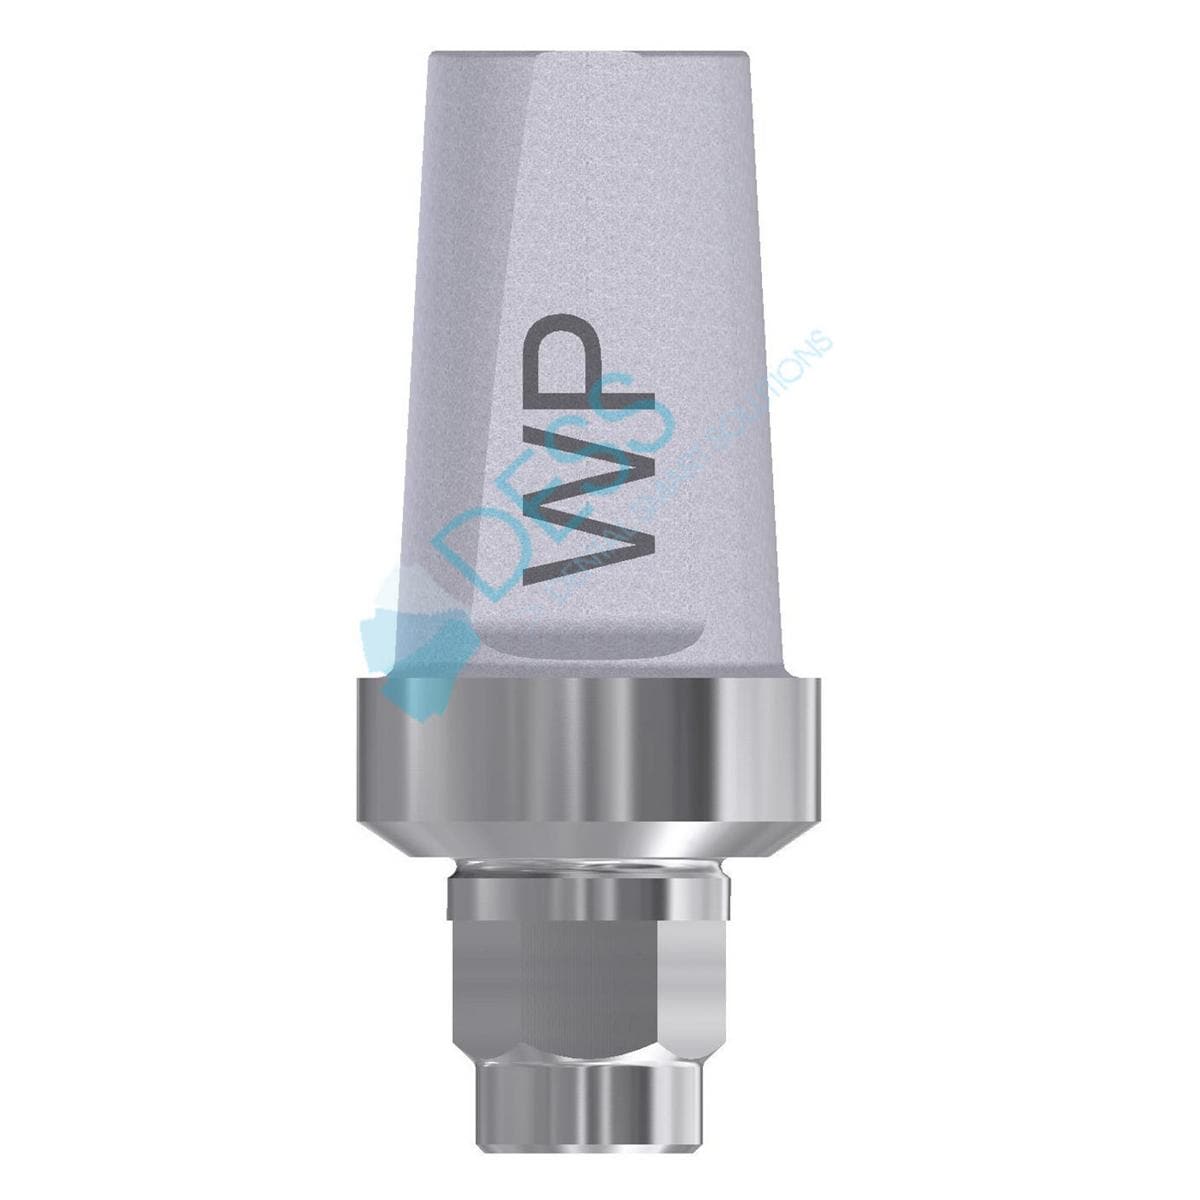 Titanabutment - kompatibel mit Dentsply Friadent® Xive® - WP Ø 4,5 mm, 0° gewinkelt